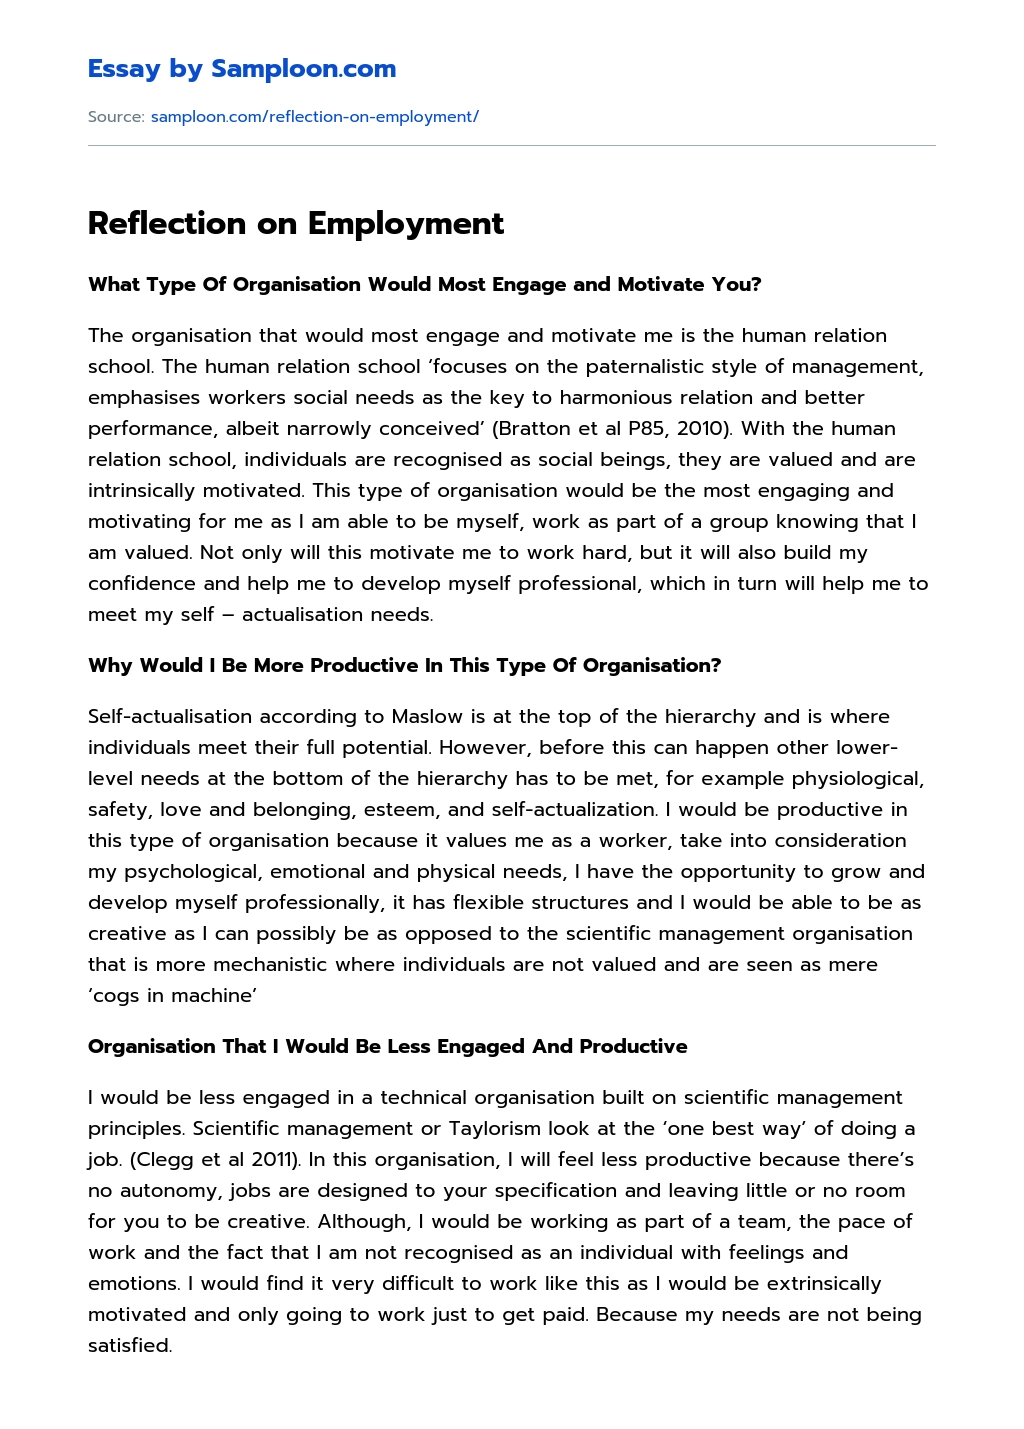 Reflection on Employment essay